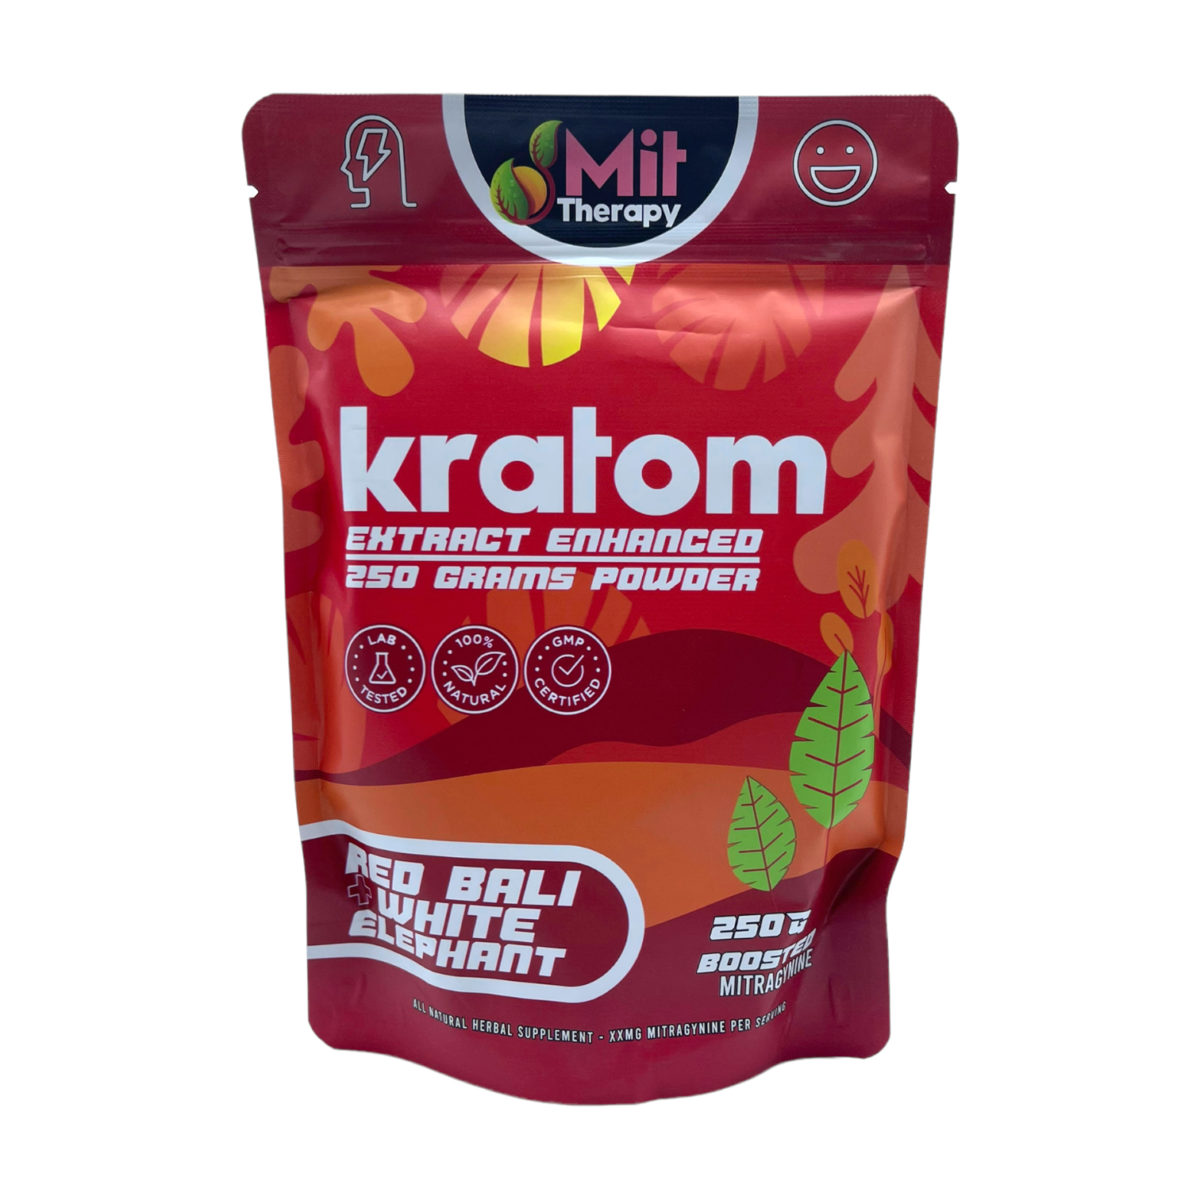 MIT Therapy Red Bali White Elephant Extract Enhanced Kratom Powder